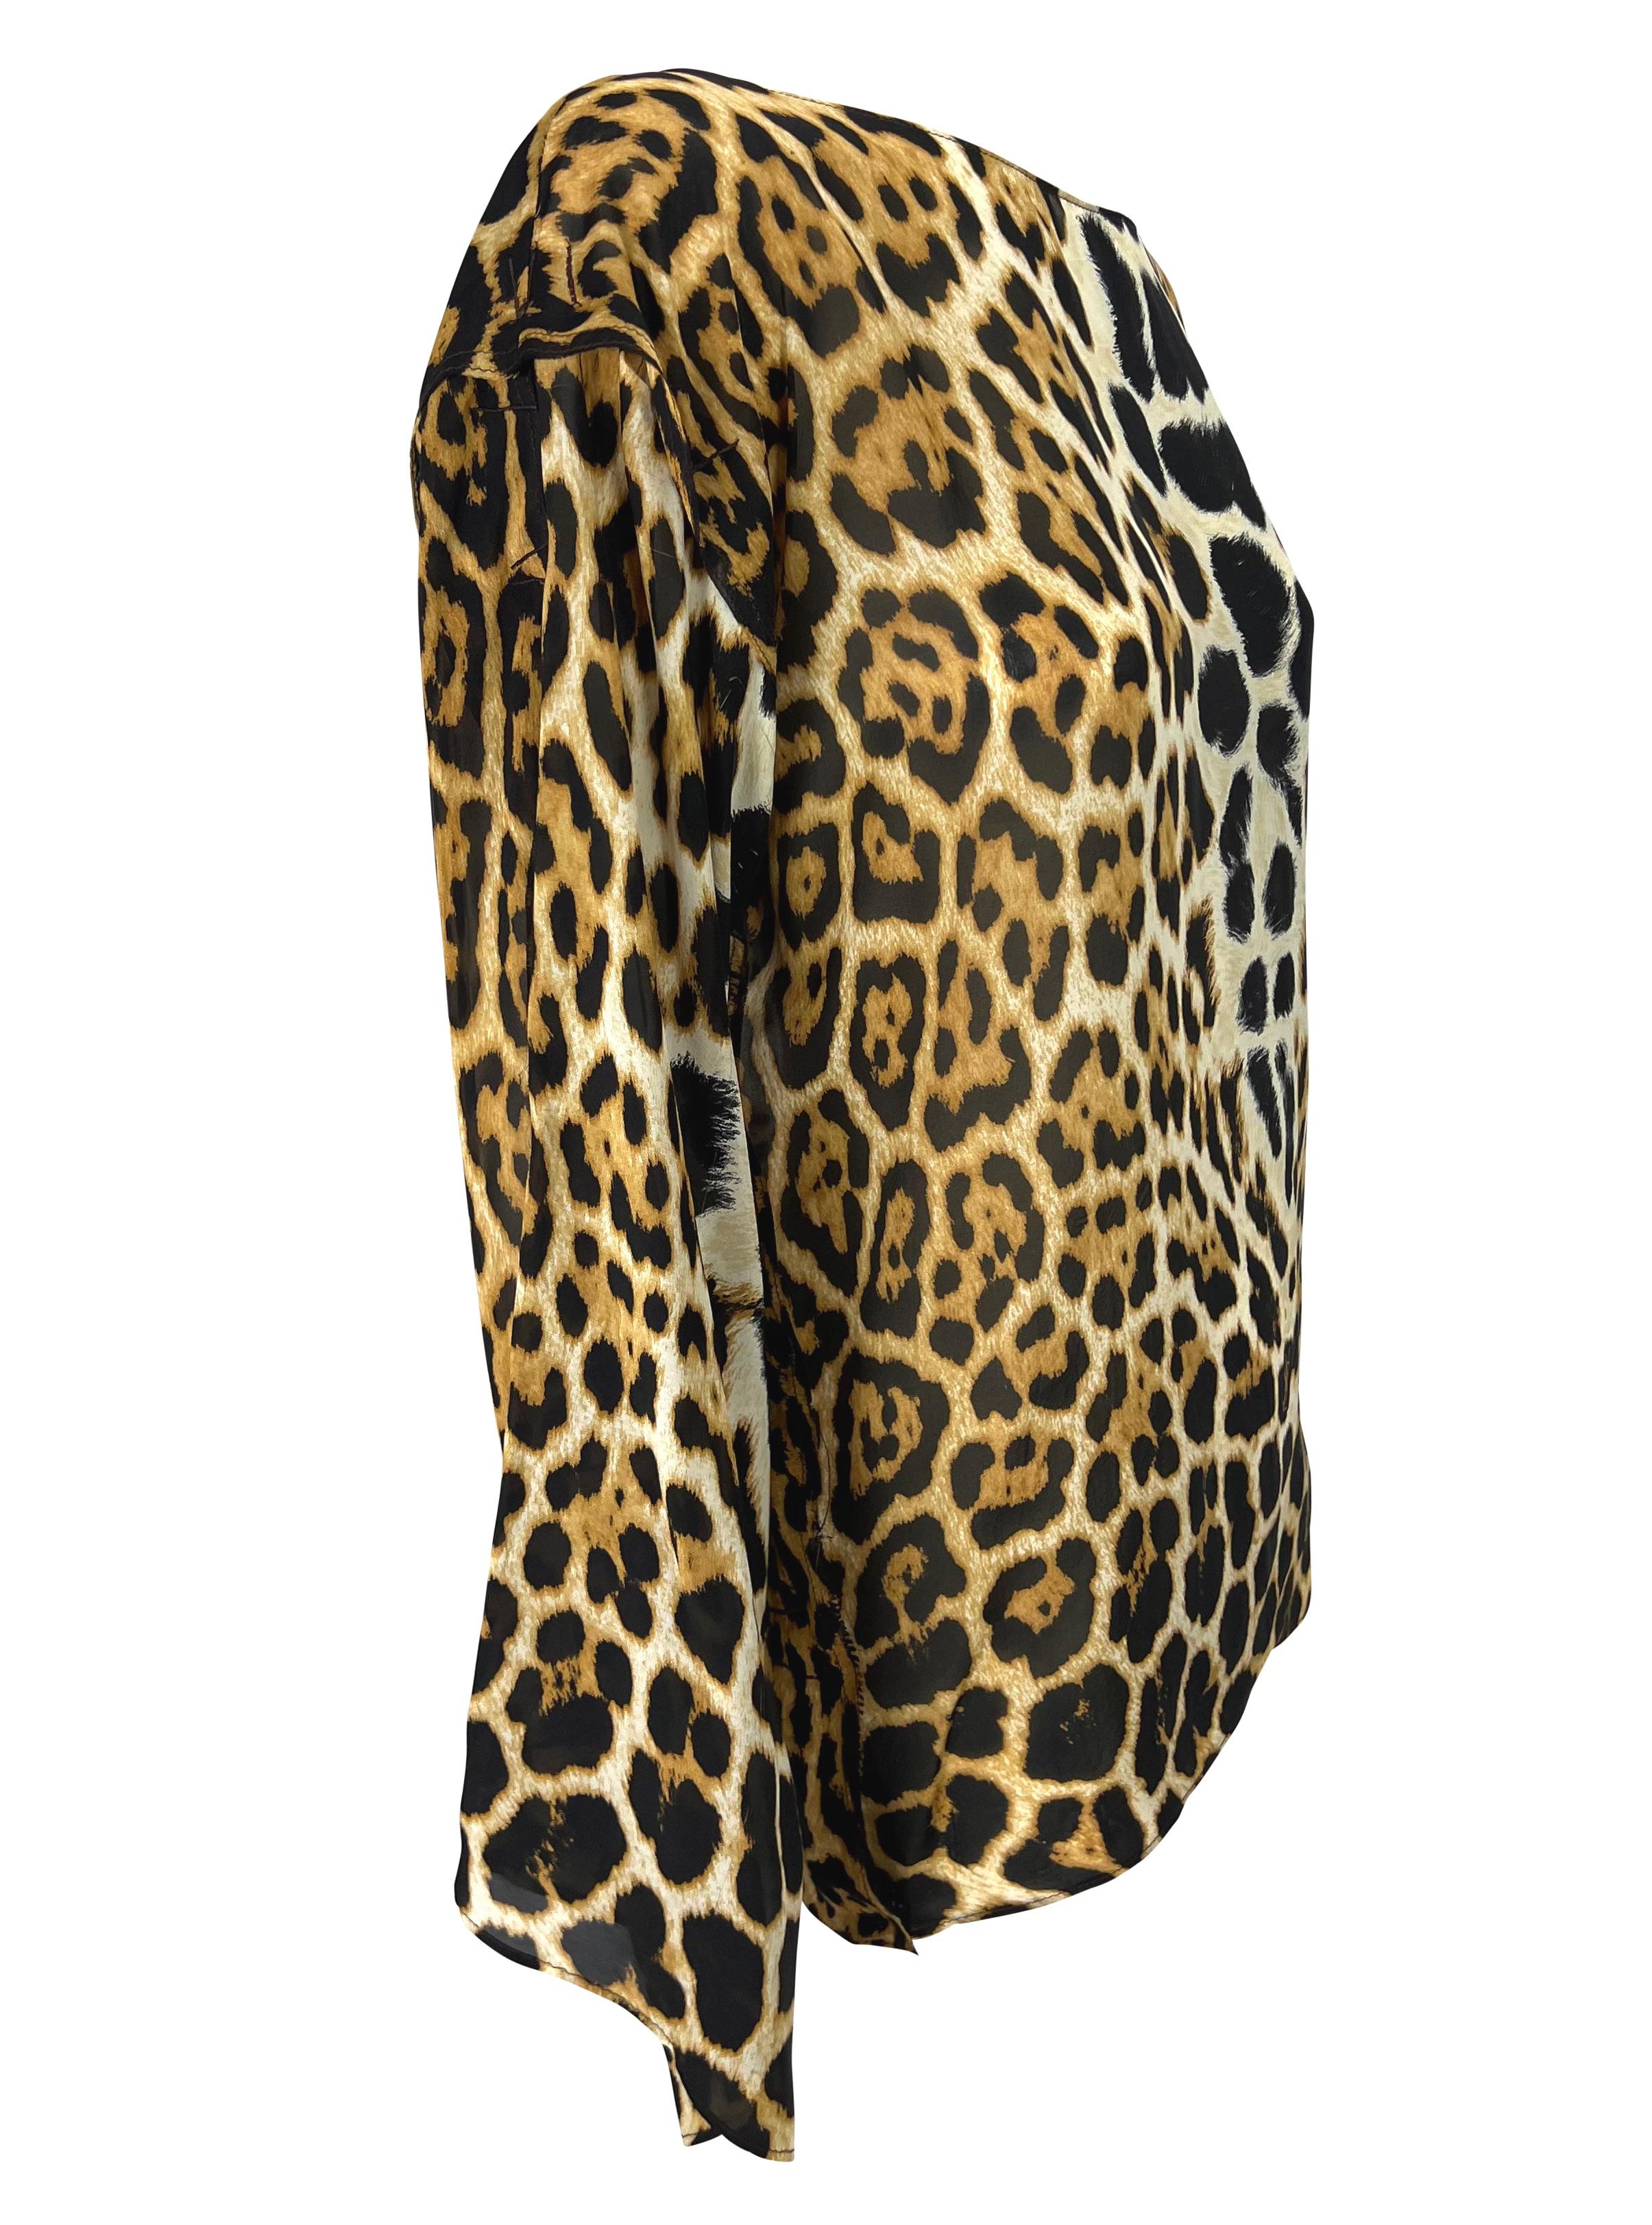 S/S 2002 Yves Saint Laurent by Tom Ford Safari Cheetah Print Sheer Silk ...